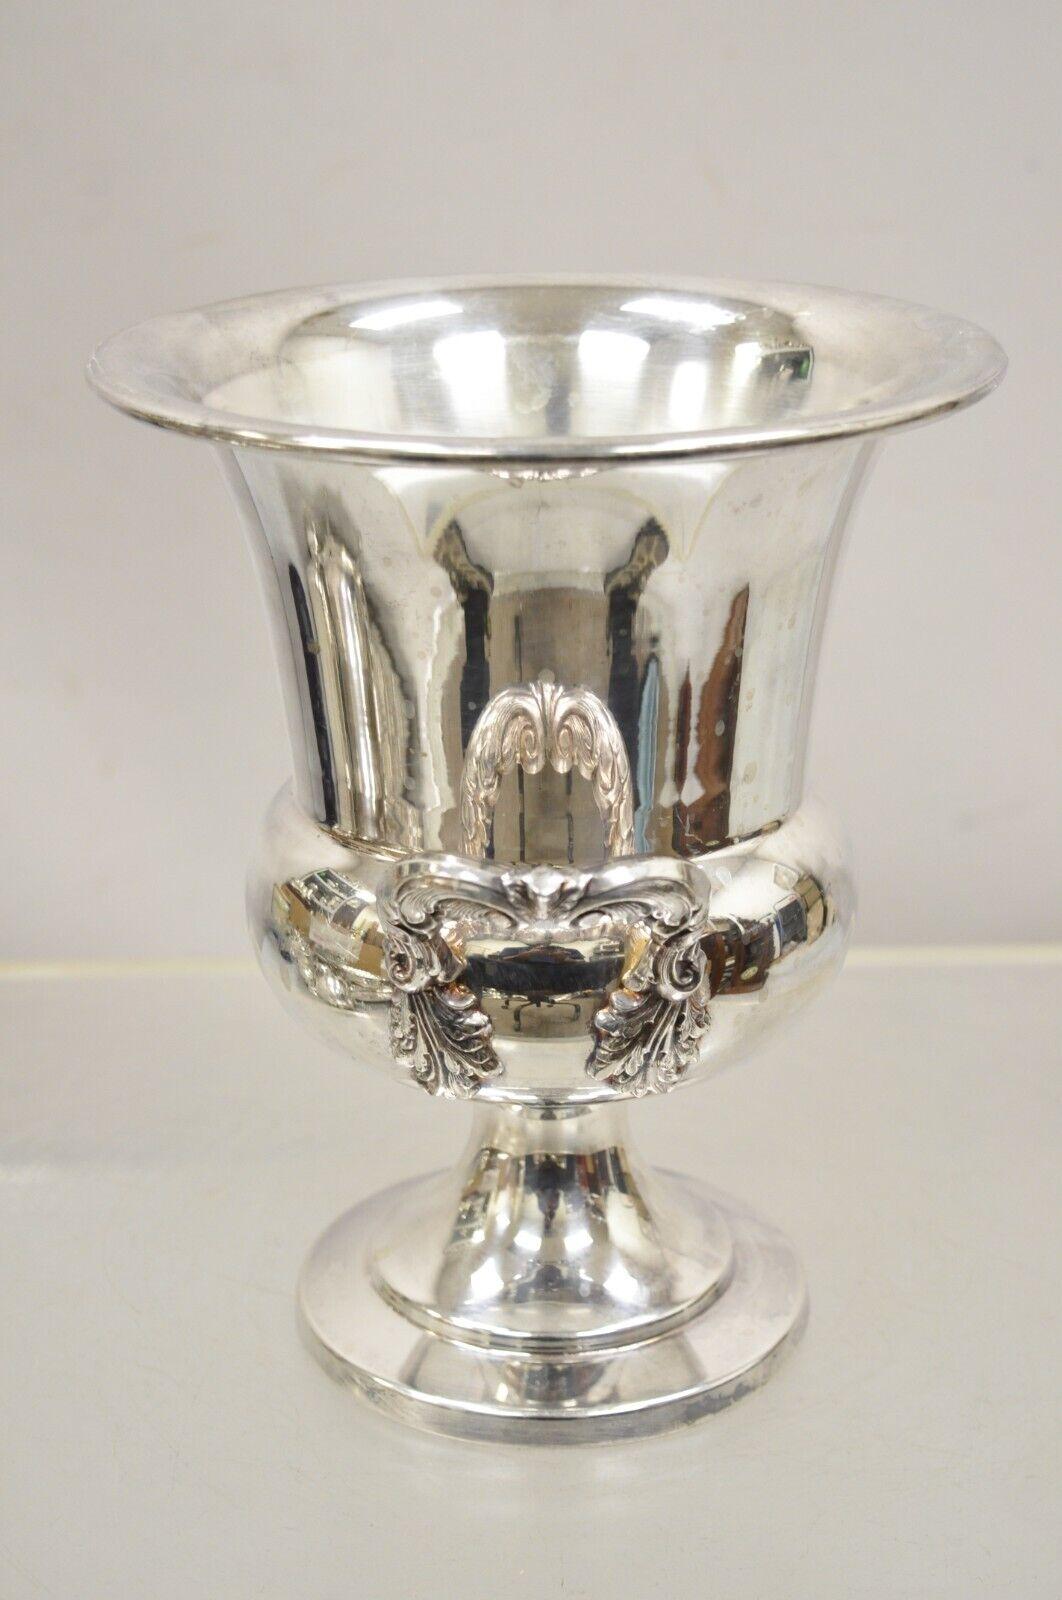 Vintage EPCA Silverplate by Poole 423 Trophy Cup Champagne Chiller Ice Bucket. Circa Mitte des 20. Jahrhunderts. Abmessungen: 9,5